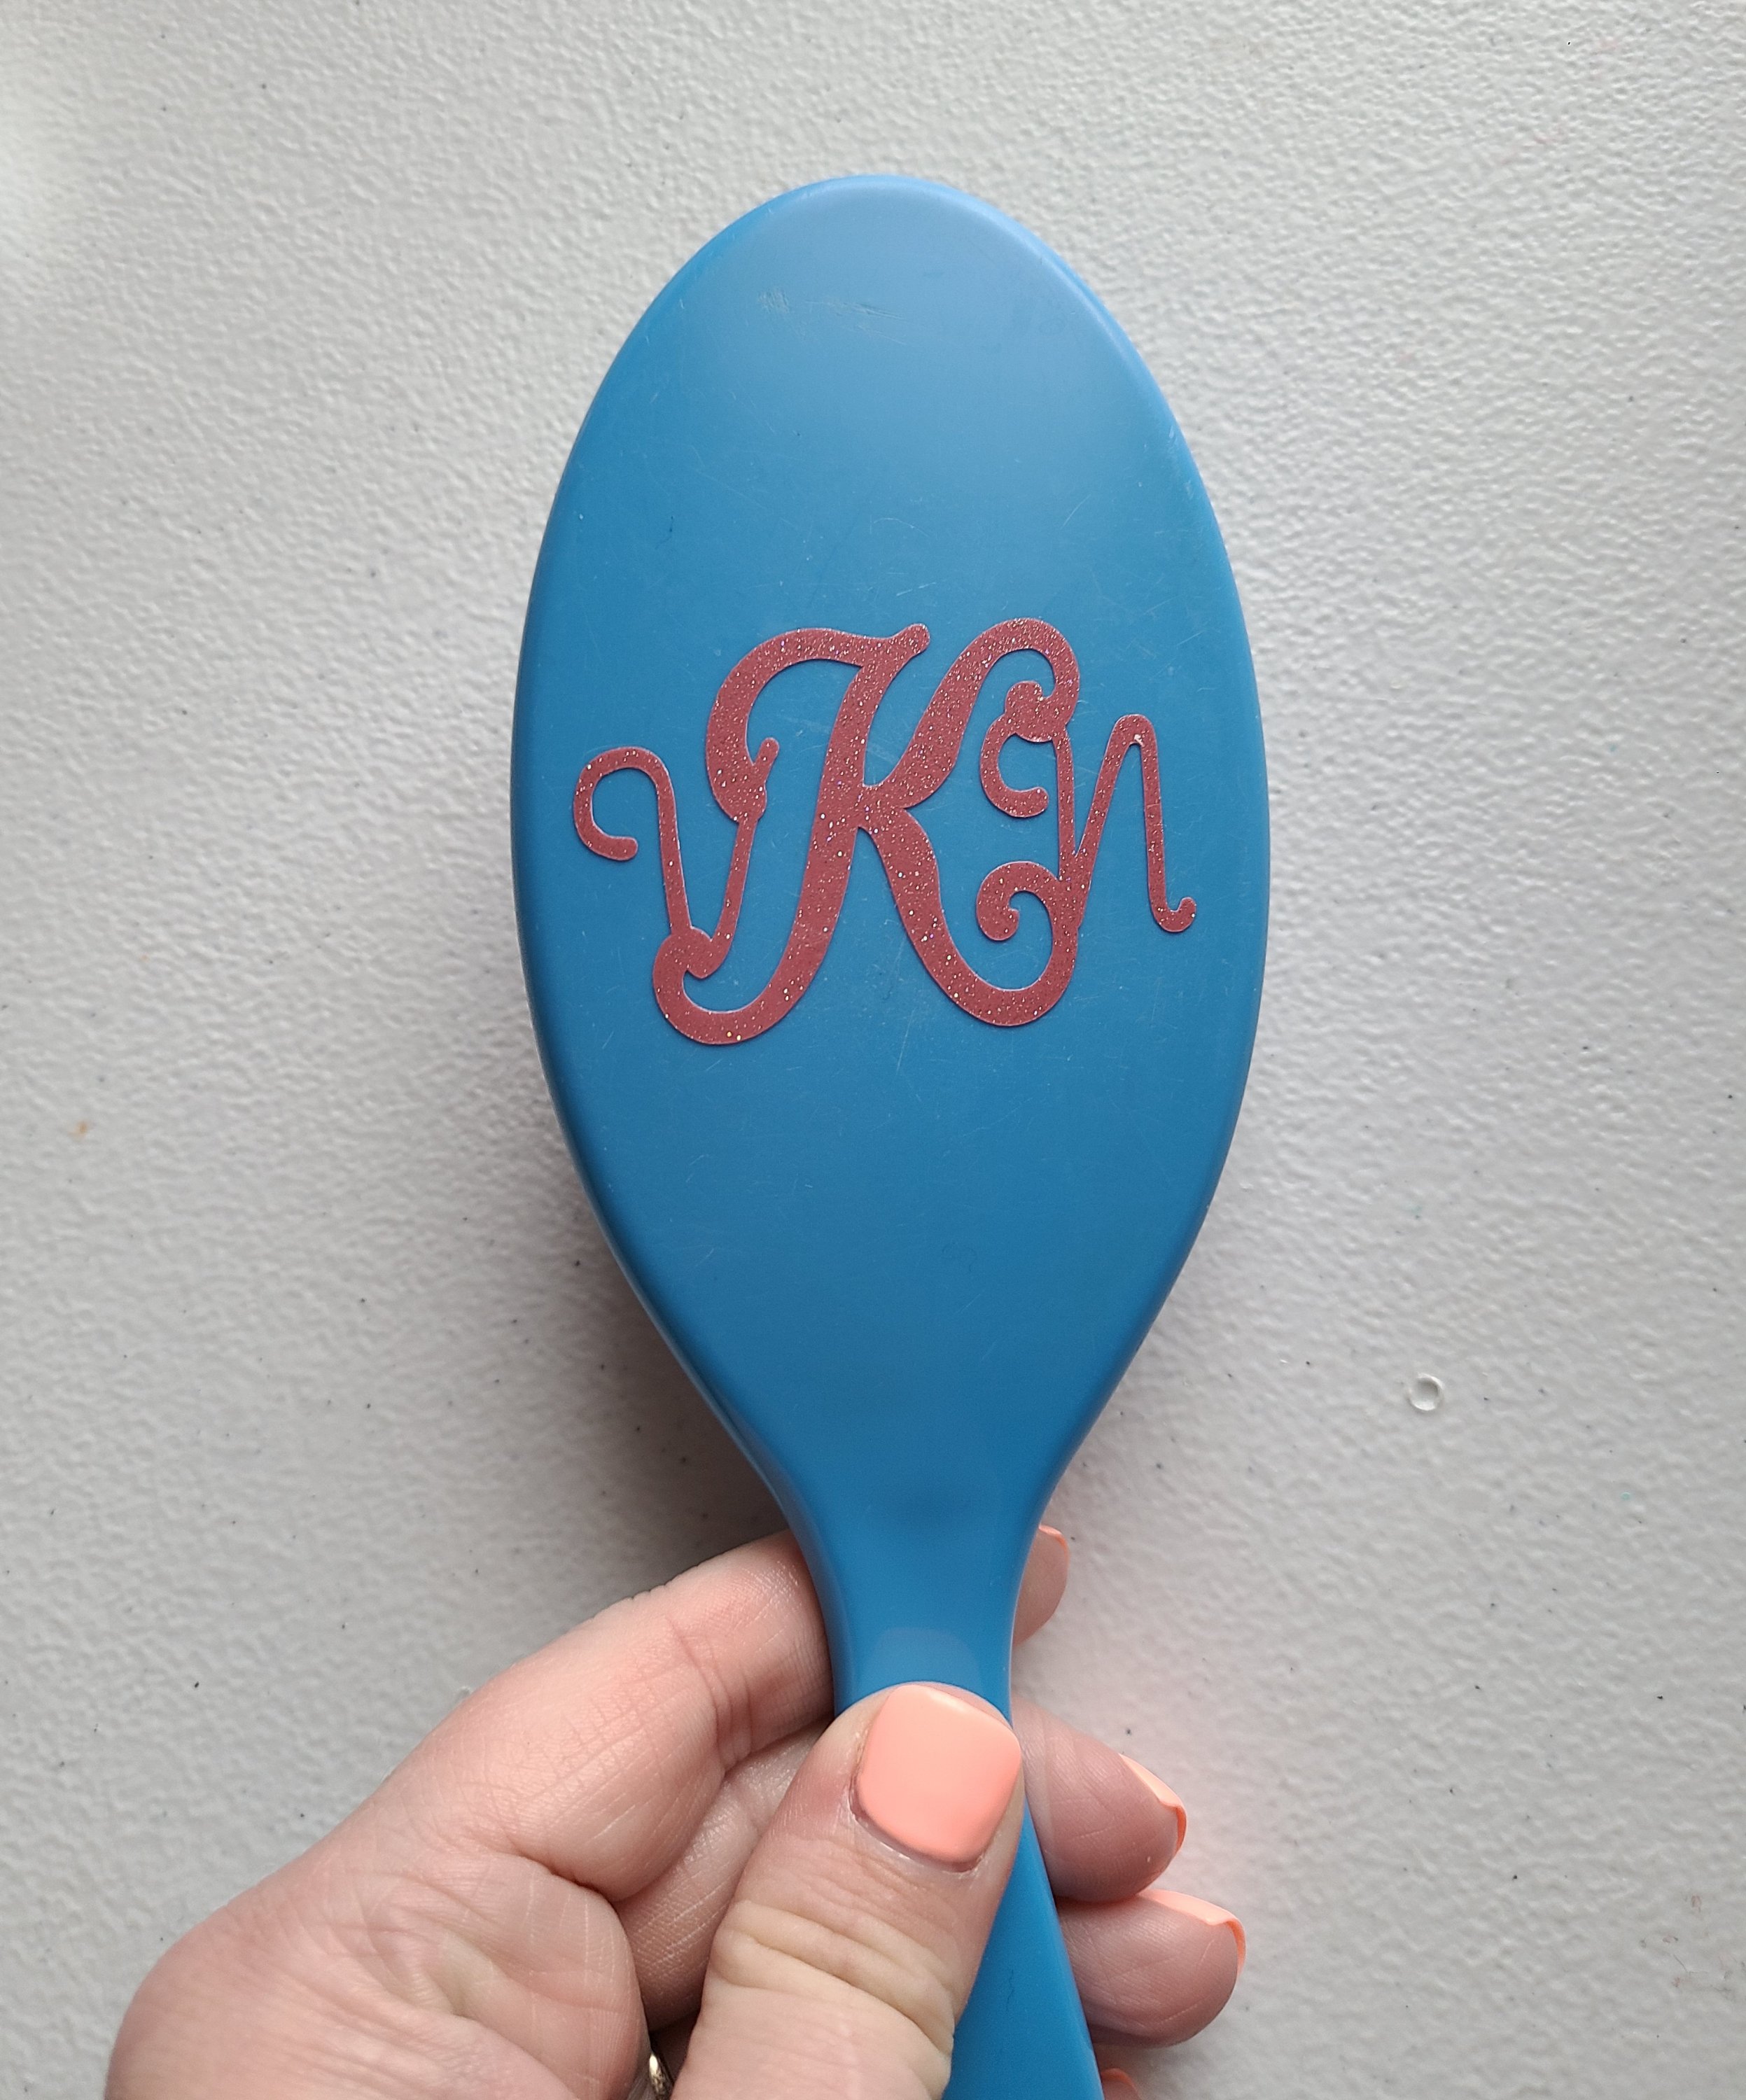 Vinyl monogram applied to a blue hairbrush.